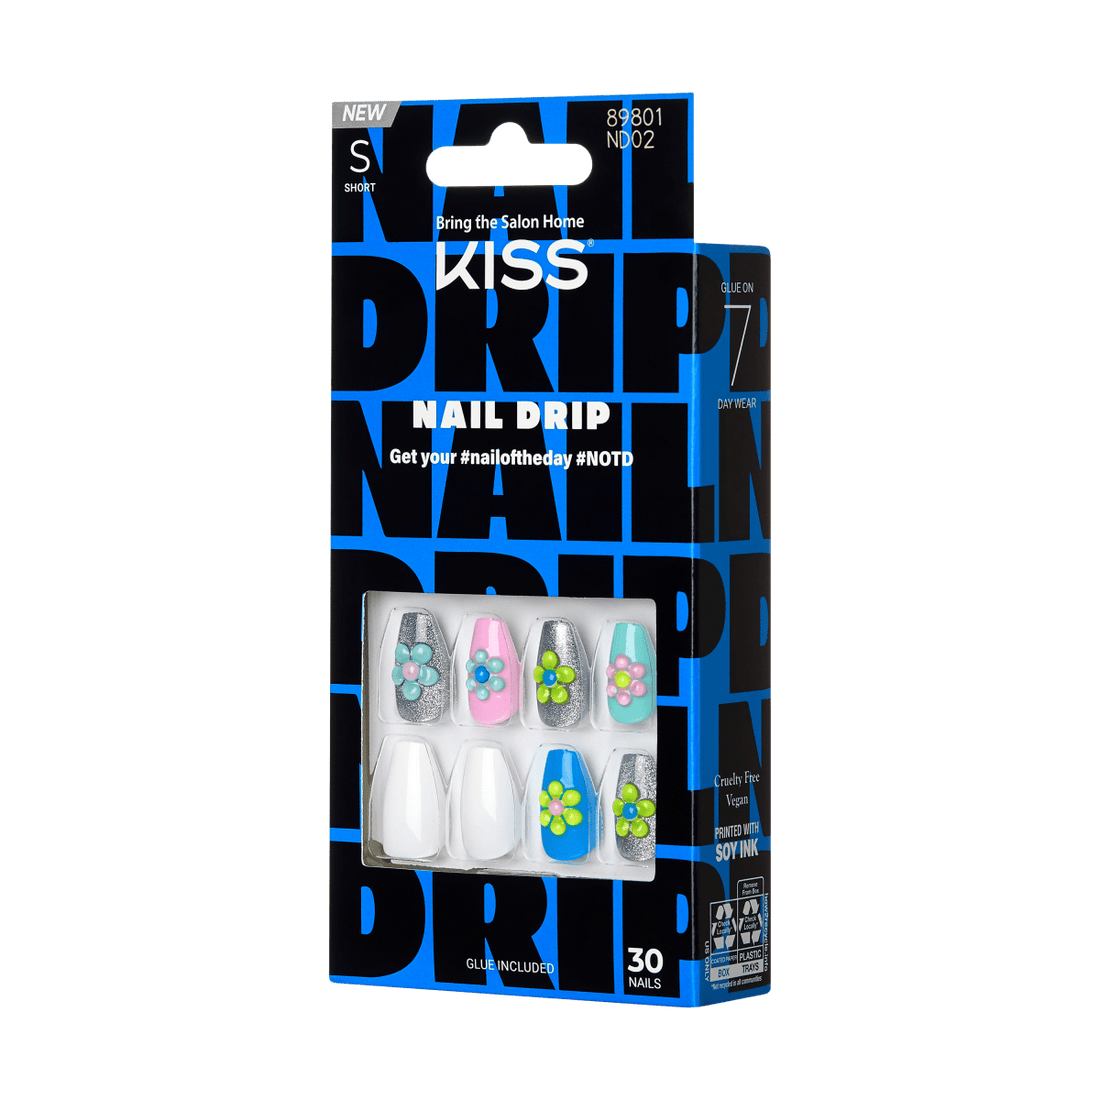 KISS Nail Drip - Drip Harder